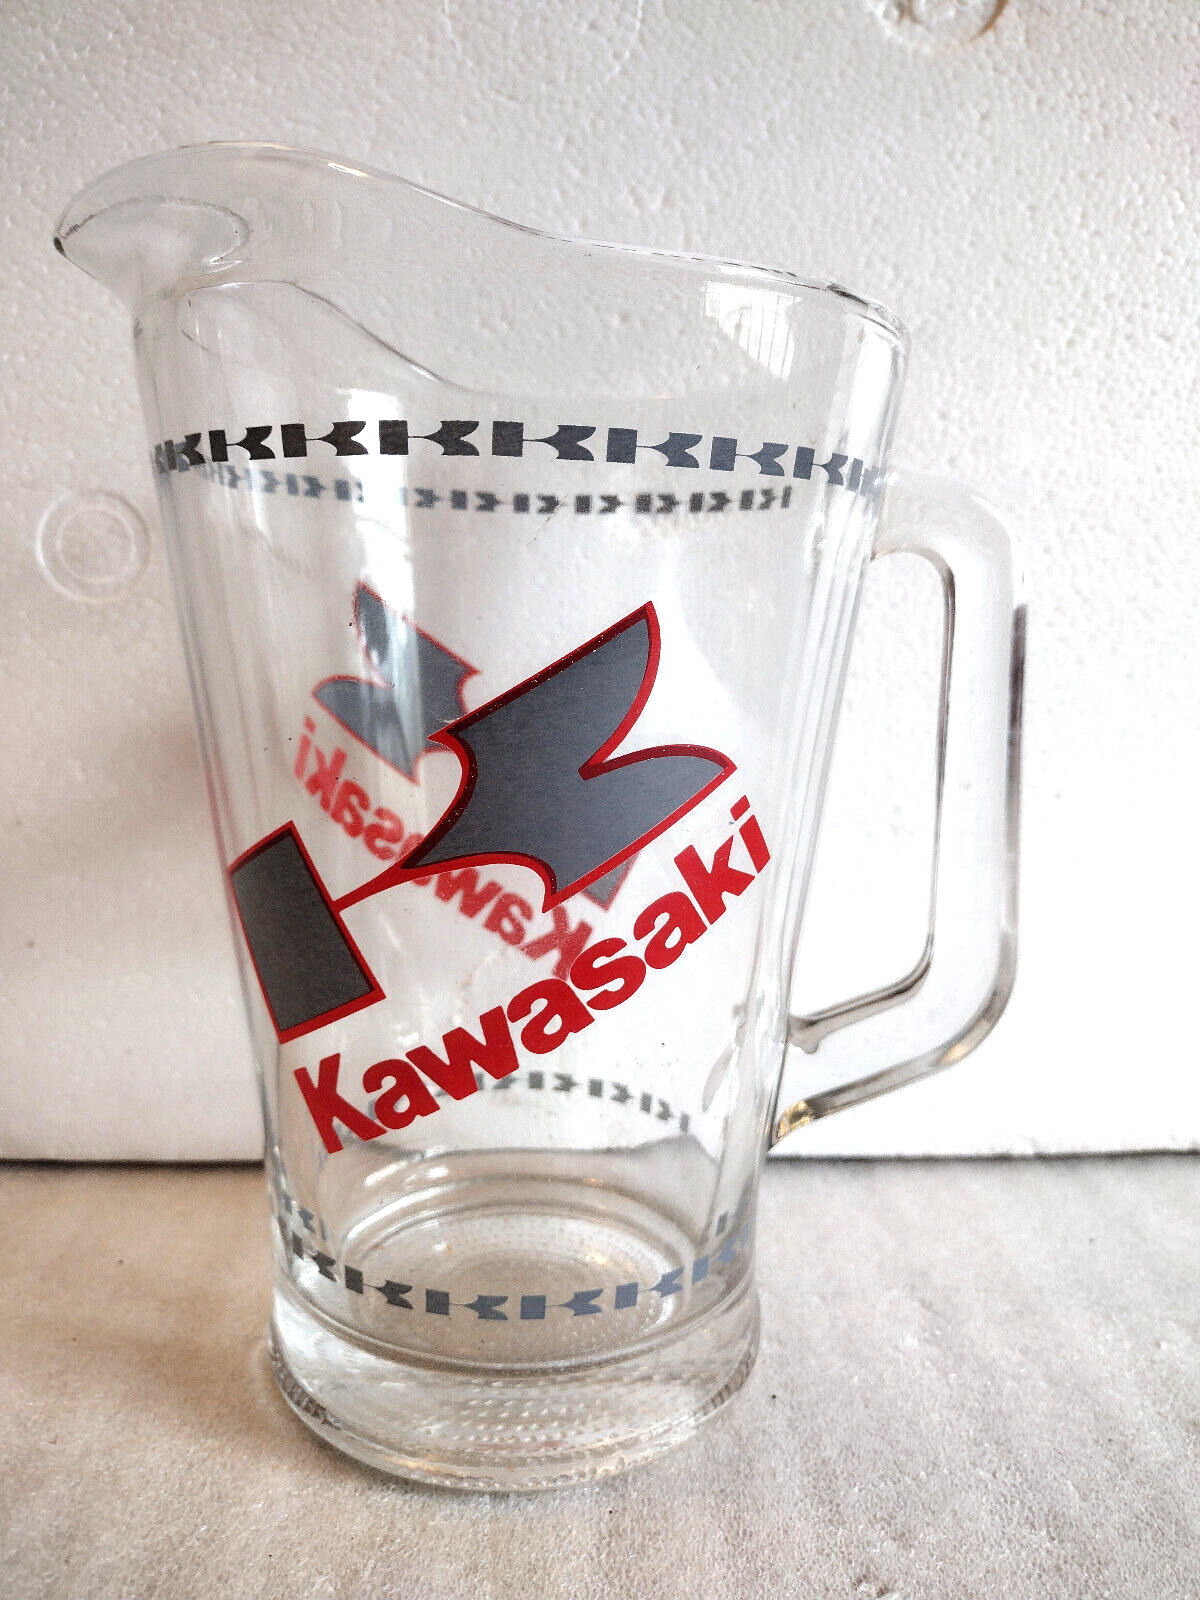 Rare Kawasaki Glass Pitcher Motorcycle Racing Drinking Barware